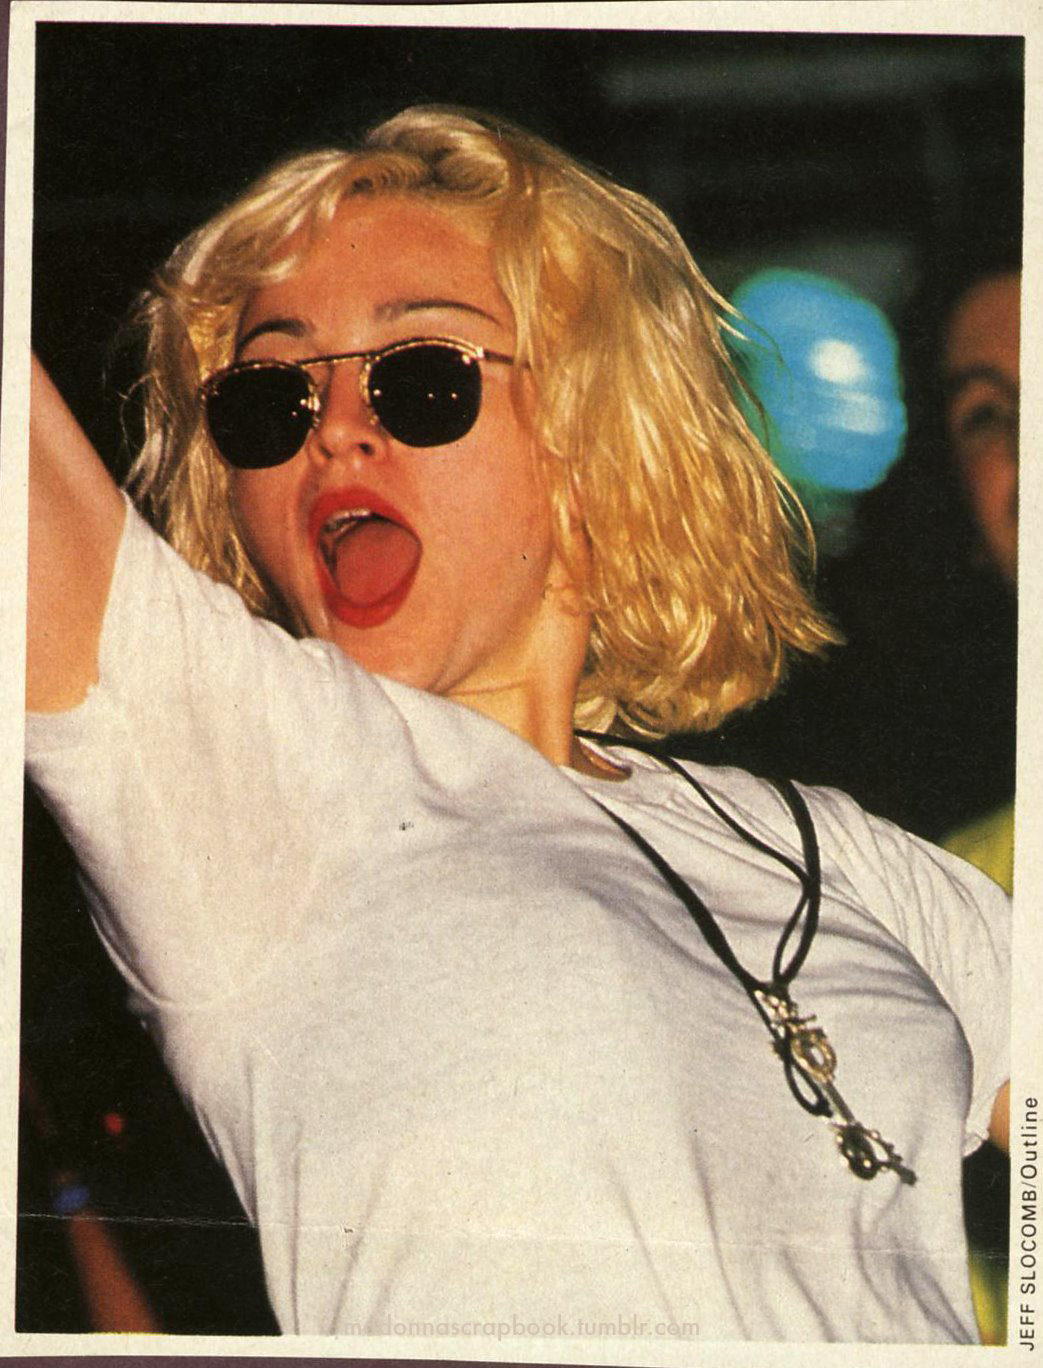 http://2.bp.blogspot.com/-MC9vo6fuuUQ/Tjdo3CGsUaI/AAAAAAAAOKQ/ptOsz2ecXF8/s1600/APLA_dance-a-thon_1989_Madonna_Scan10224.jpg